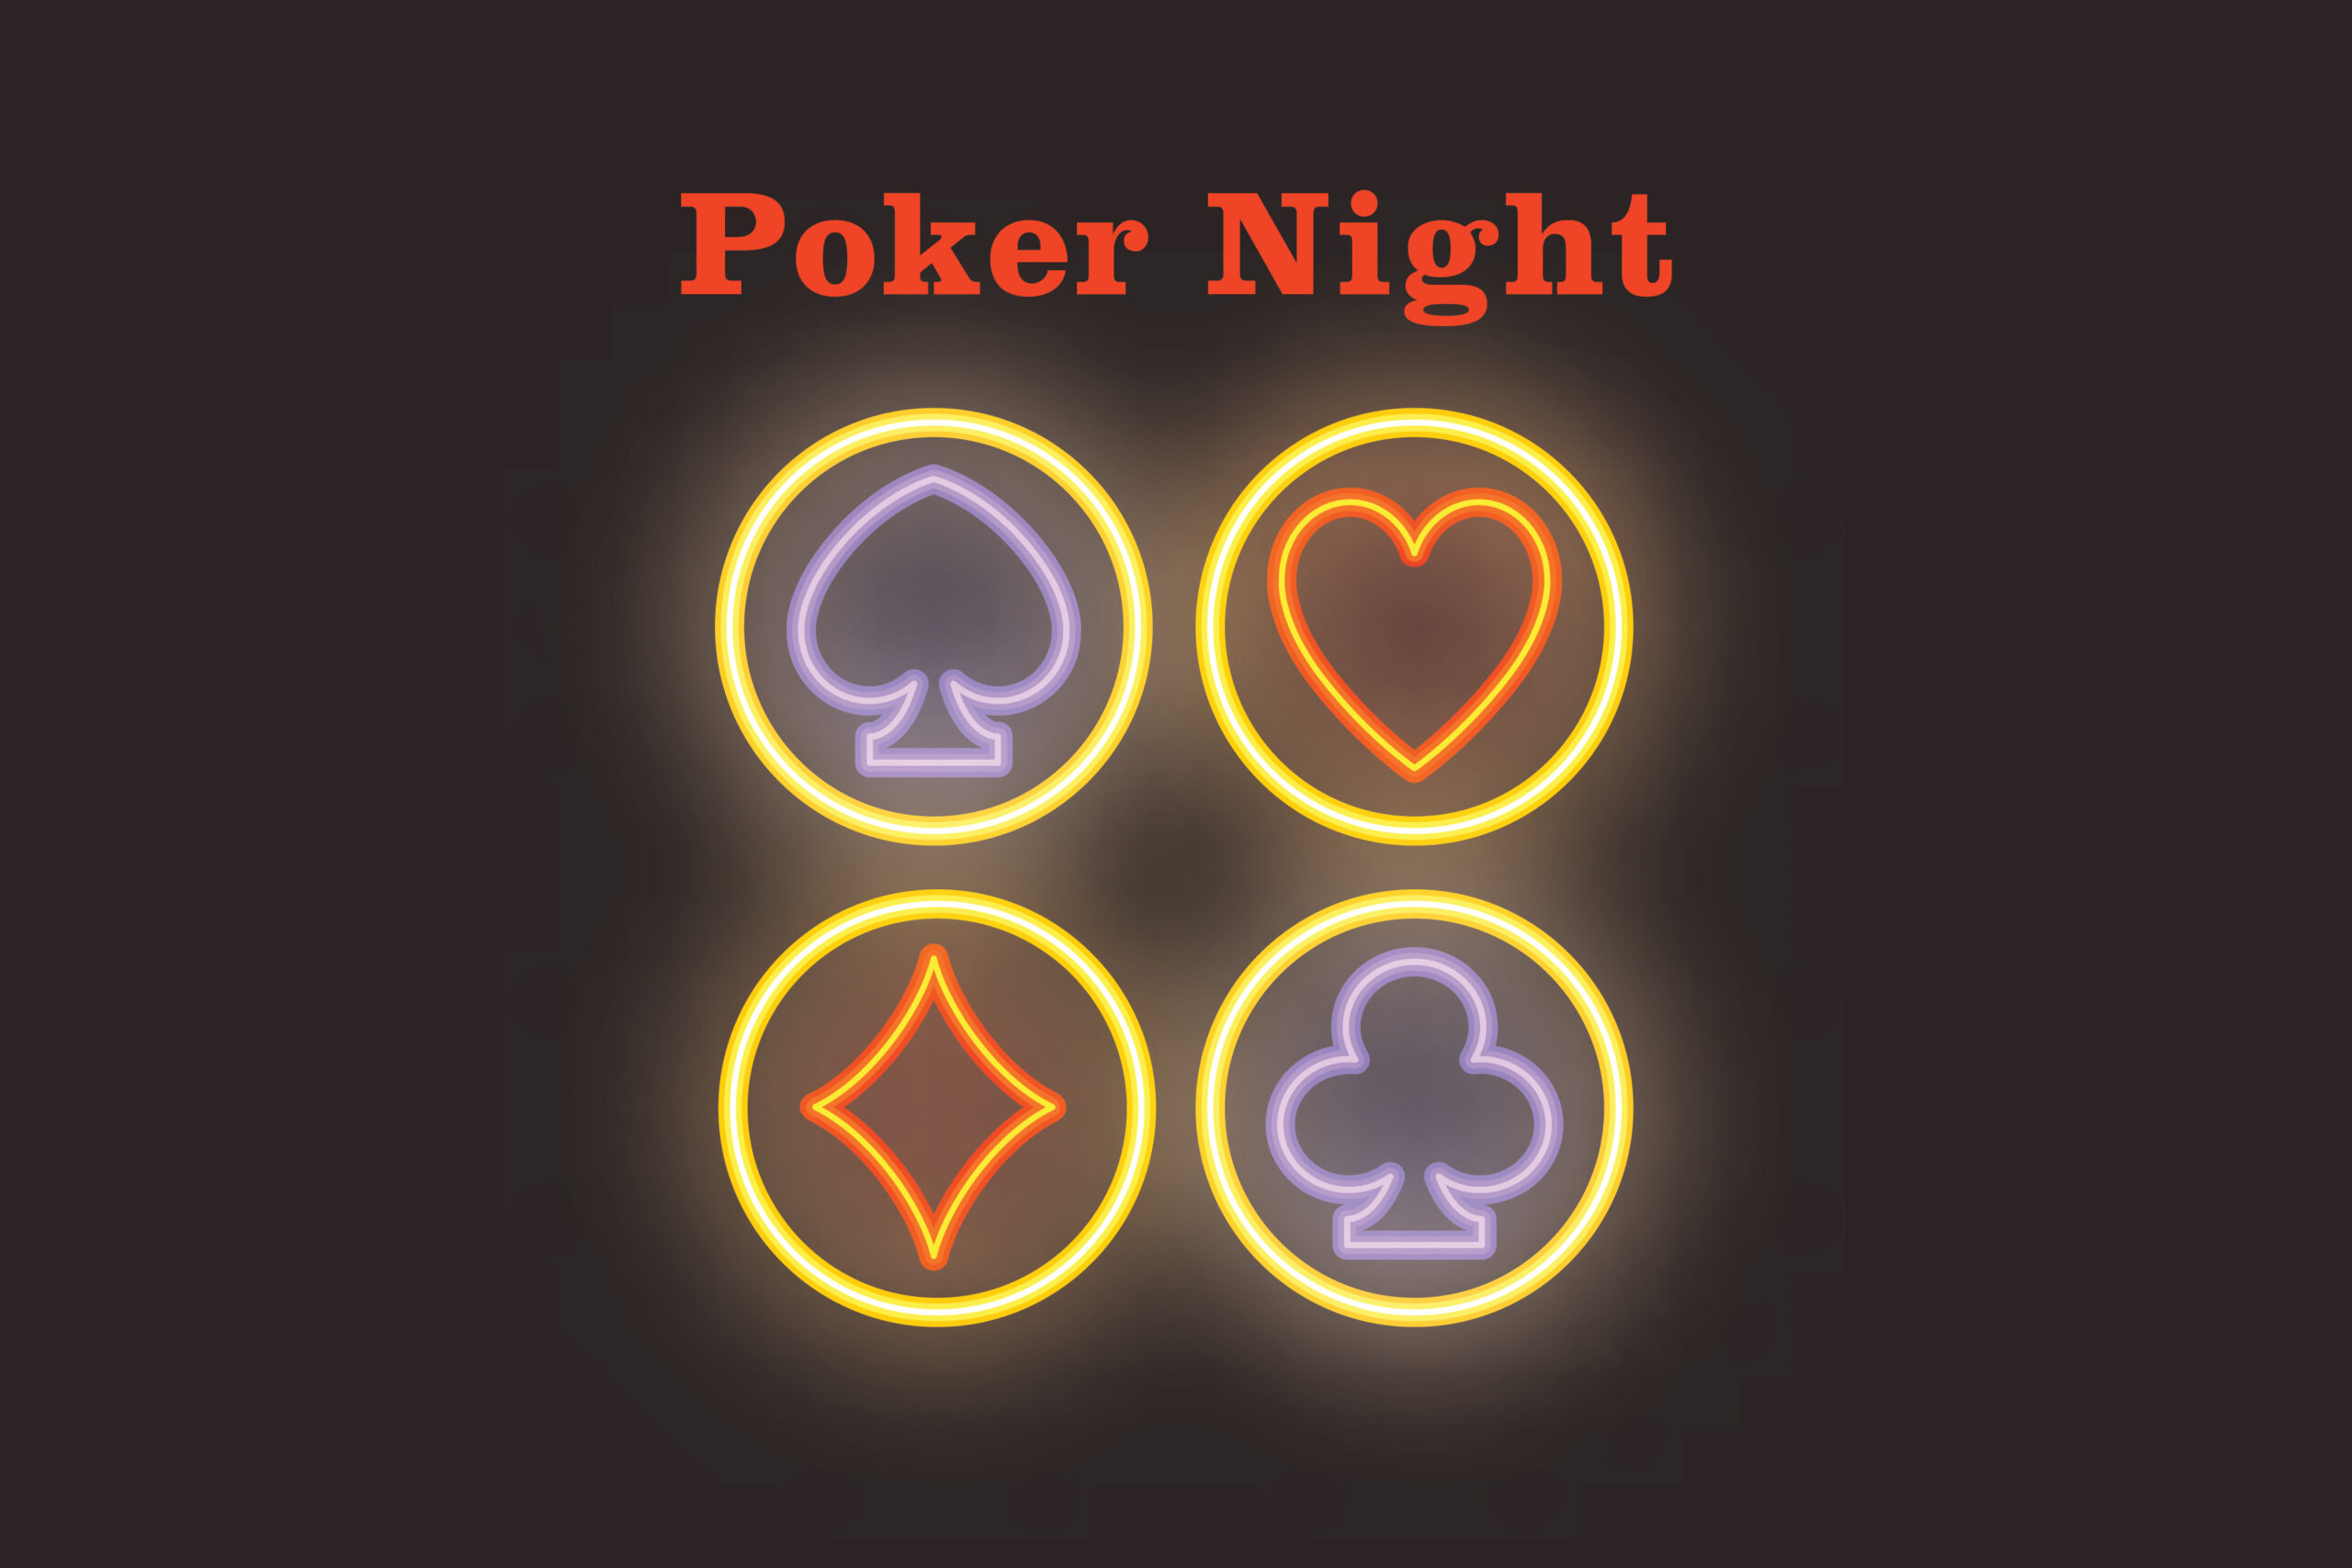 Game Night: Poker Night